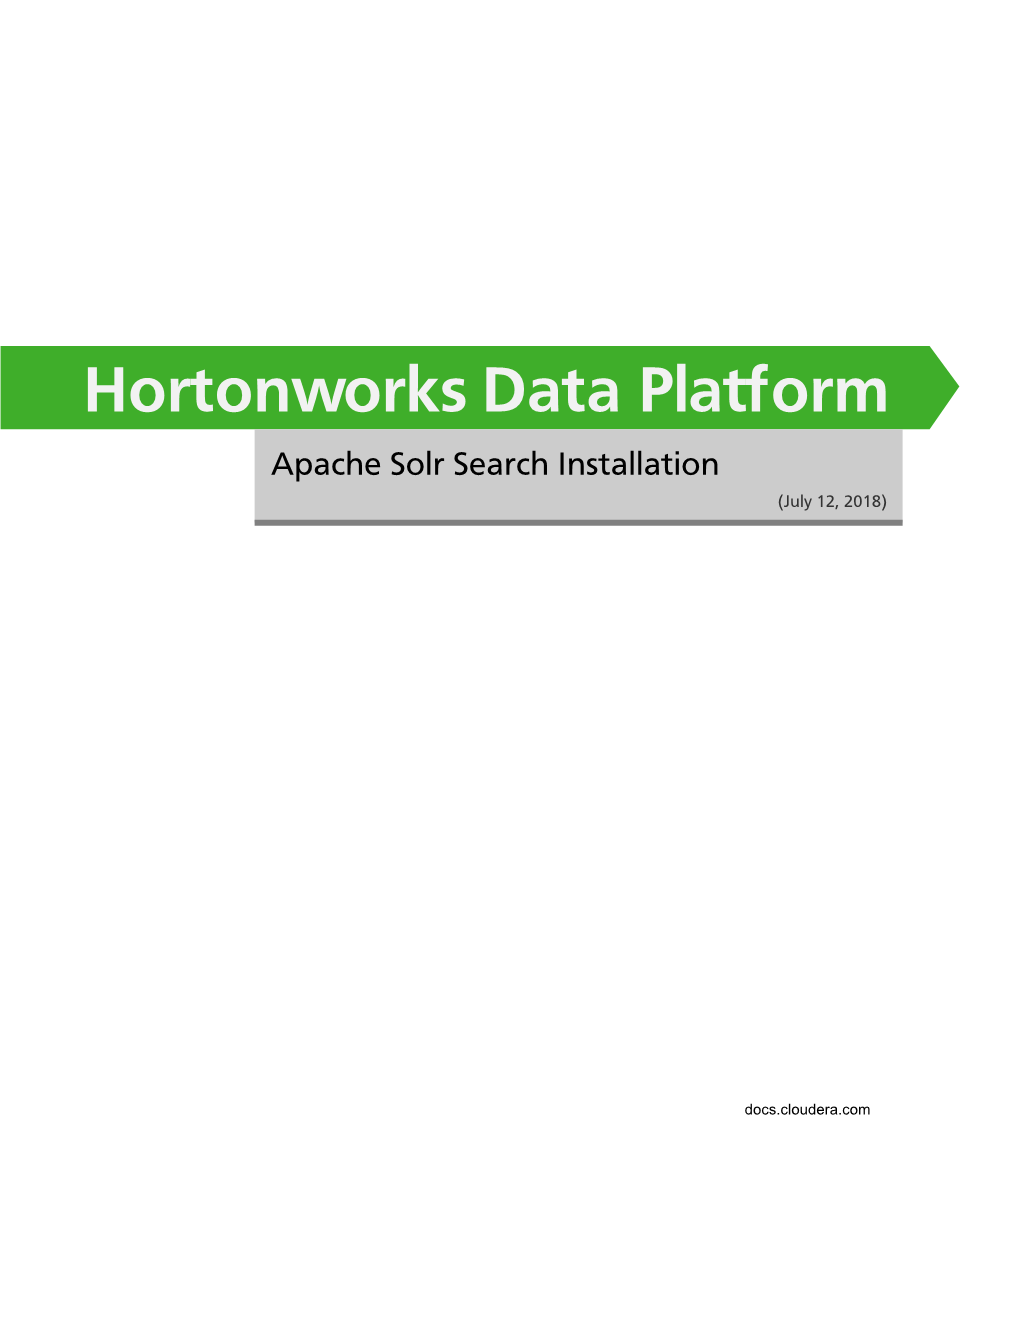 Hortonworks Data Platform Apache Solr Search Installation (July 12, 2018)